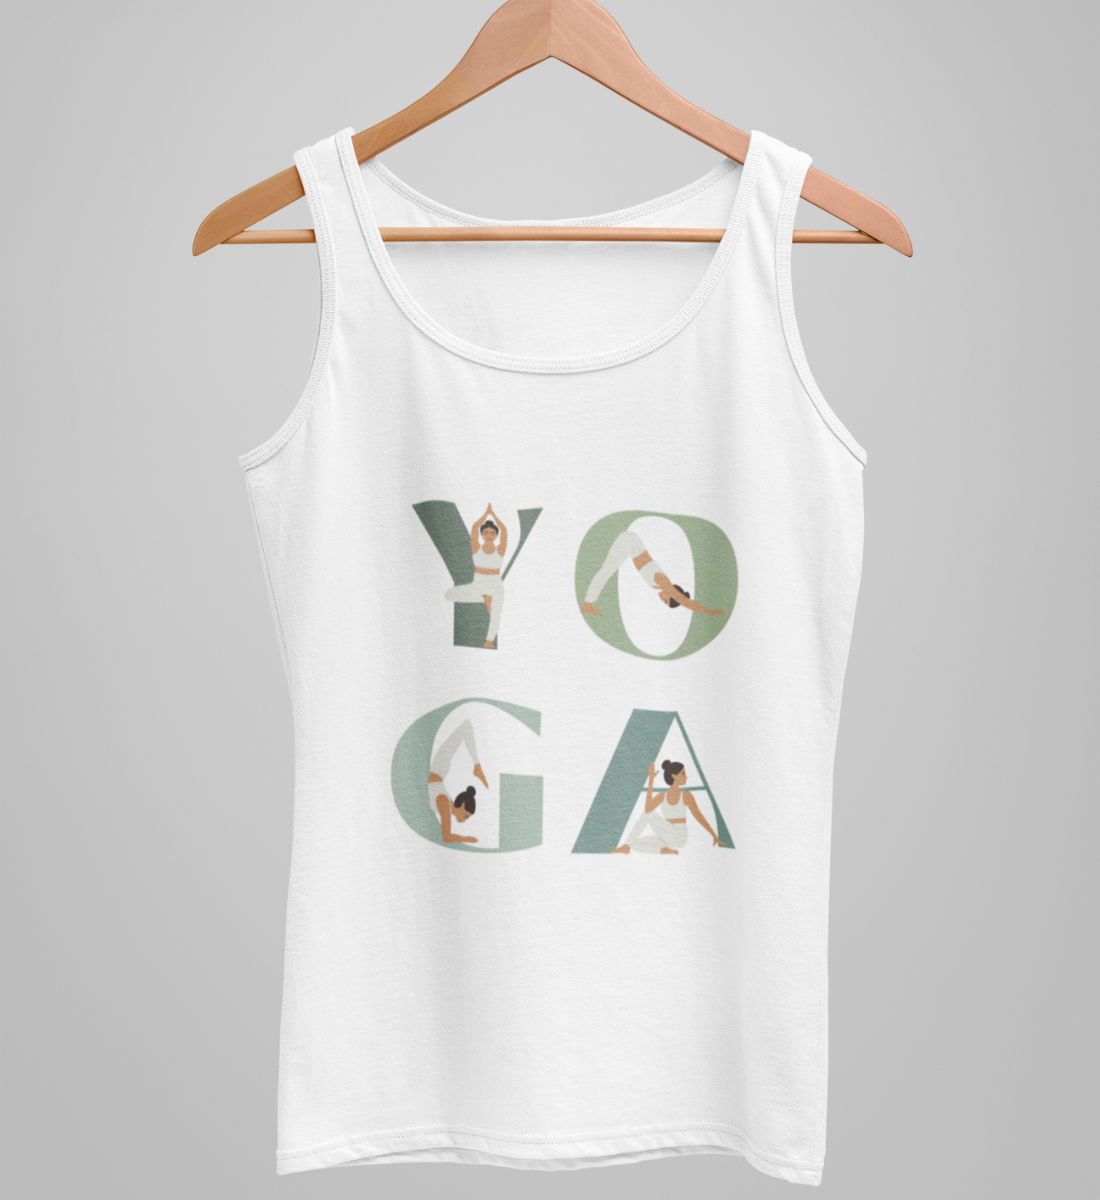 yoga girl l yoga tank top weiß l bio top l yoga Klamotten damen l faire und nachhaltige kleidung online shoppen